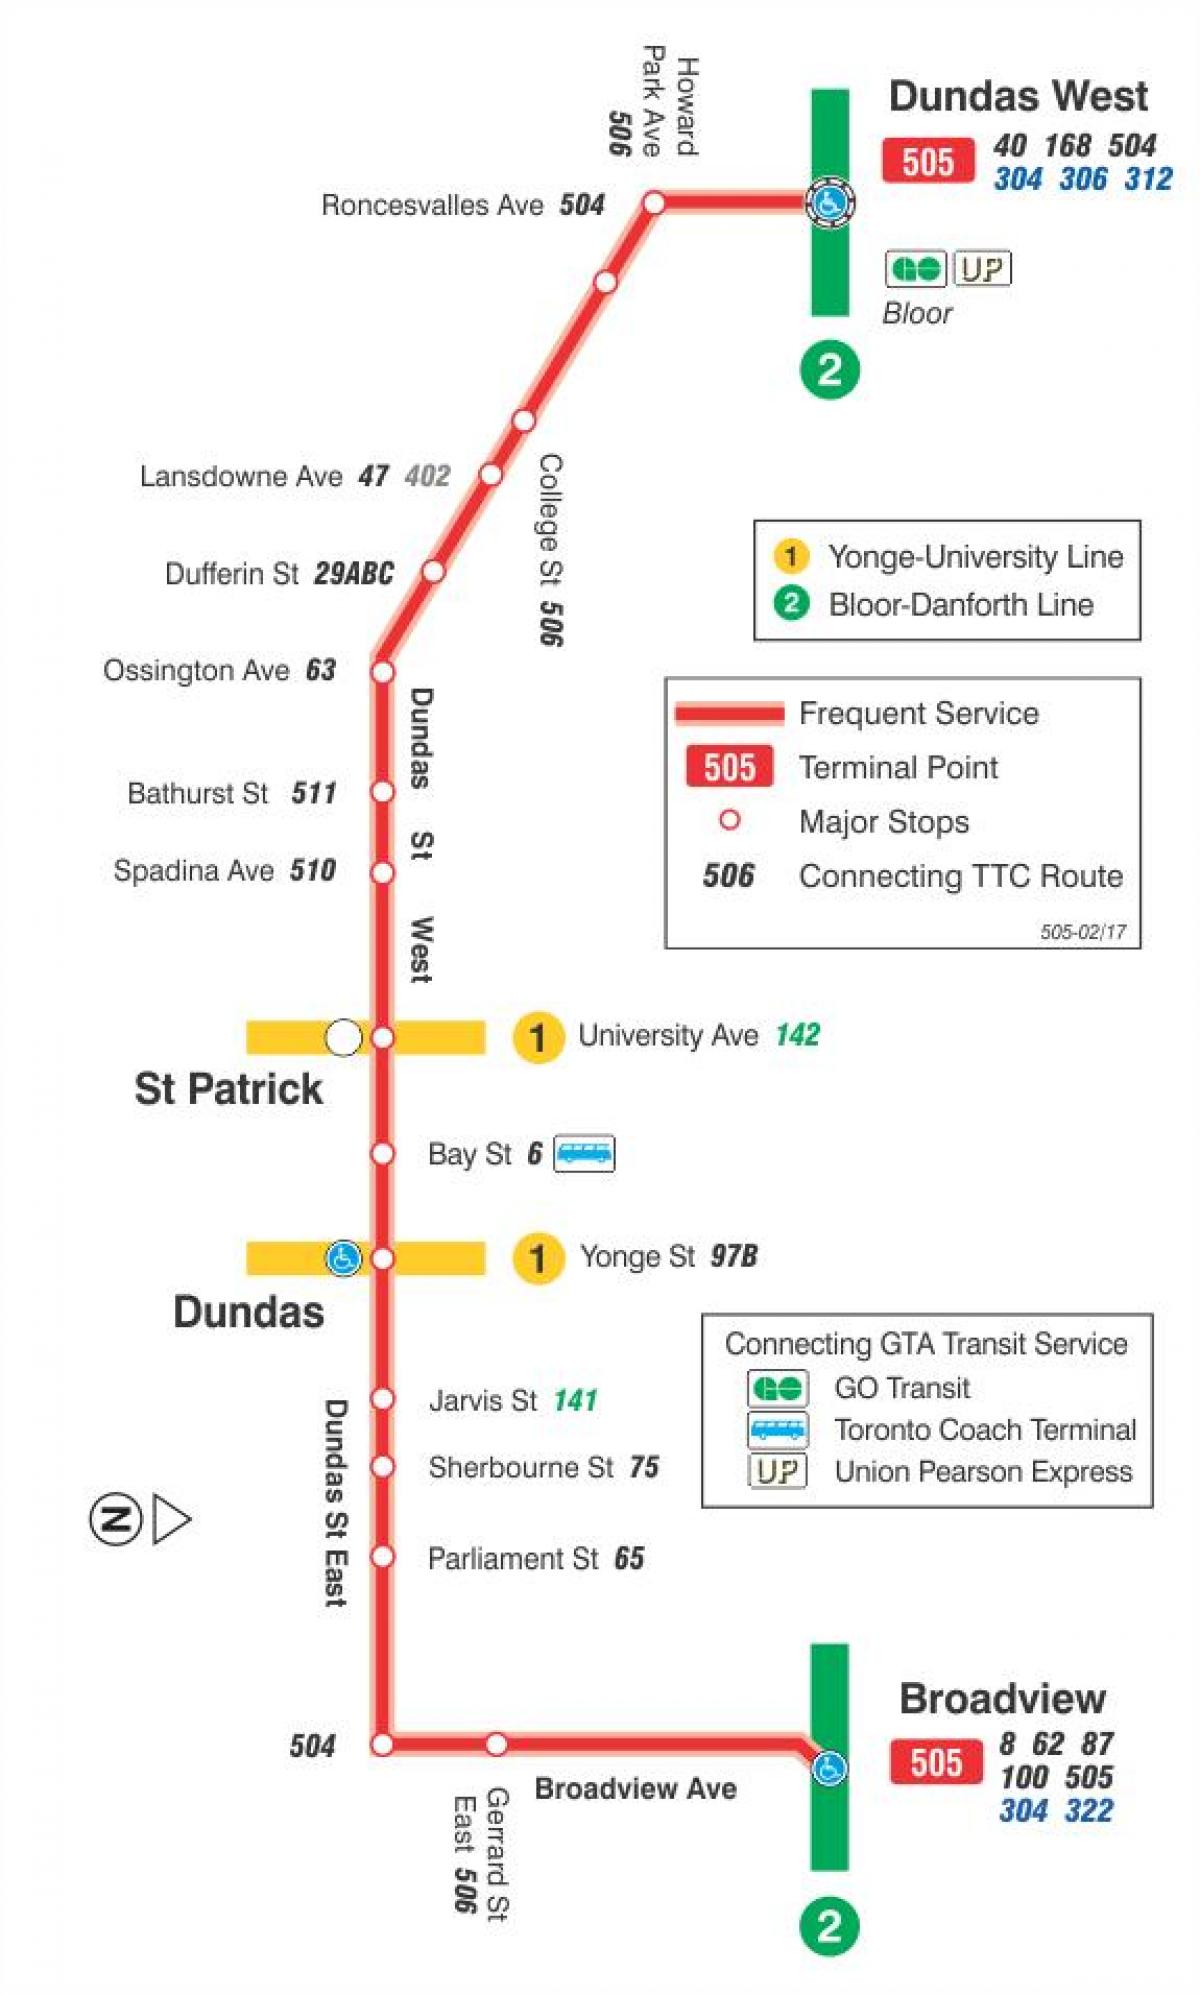 Mapa električka linky 505 Dundas